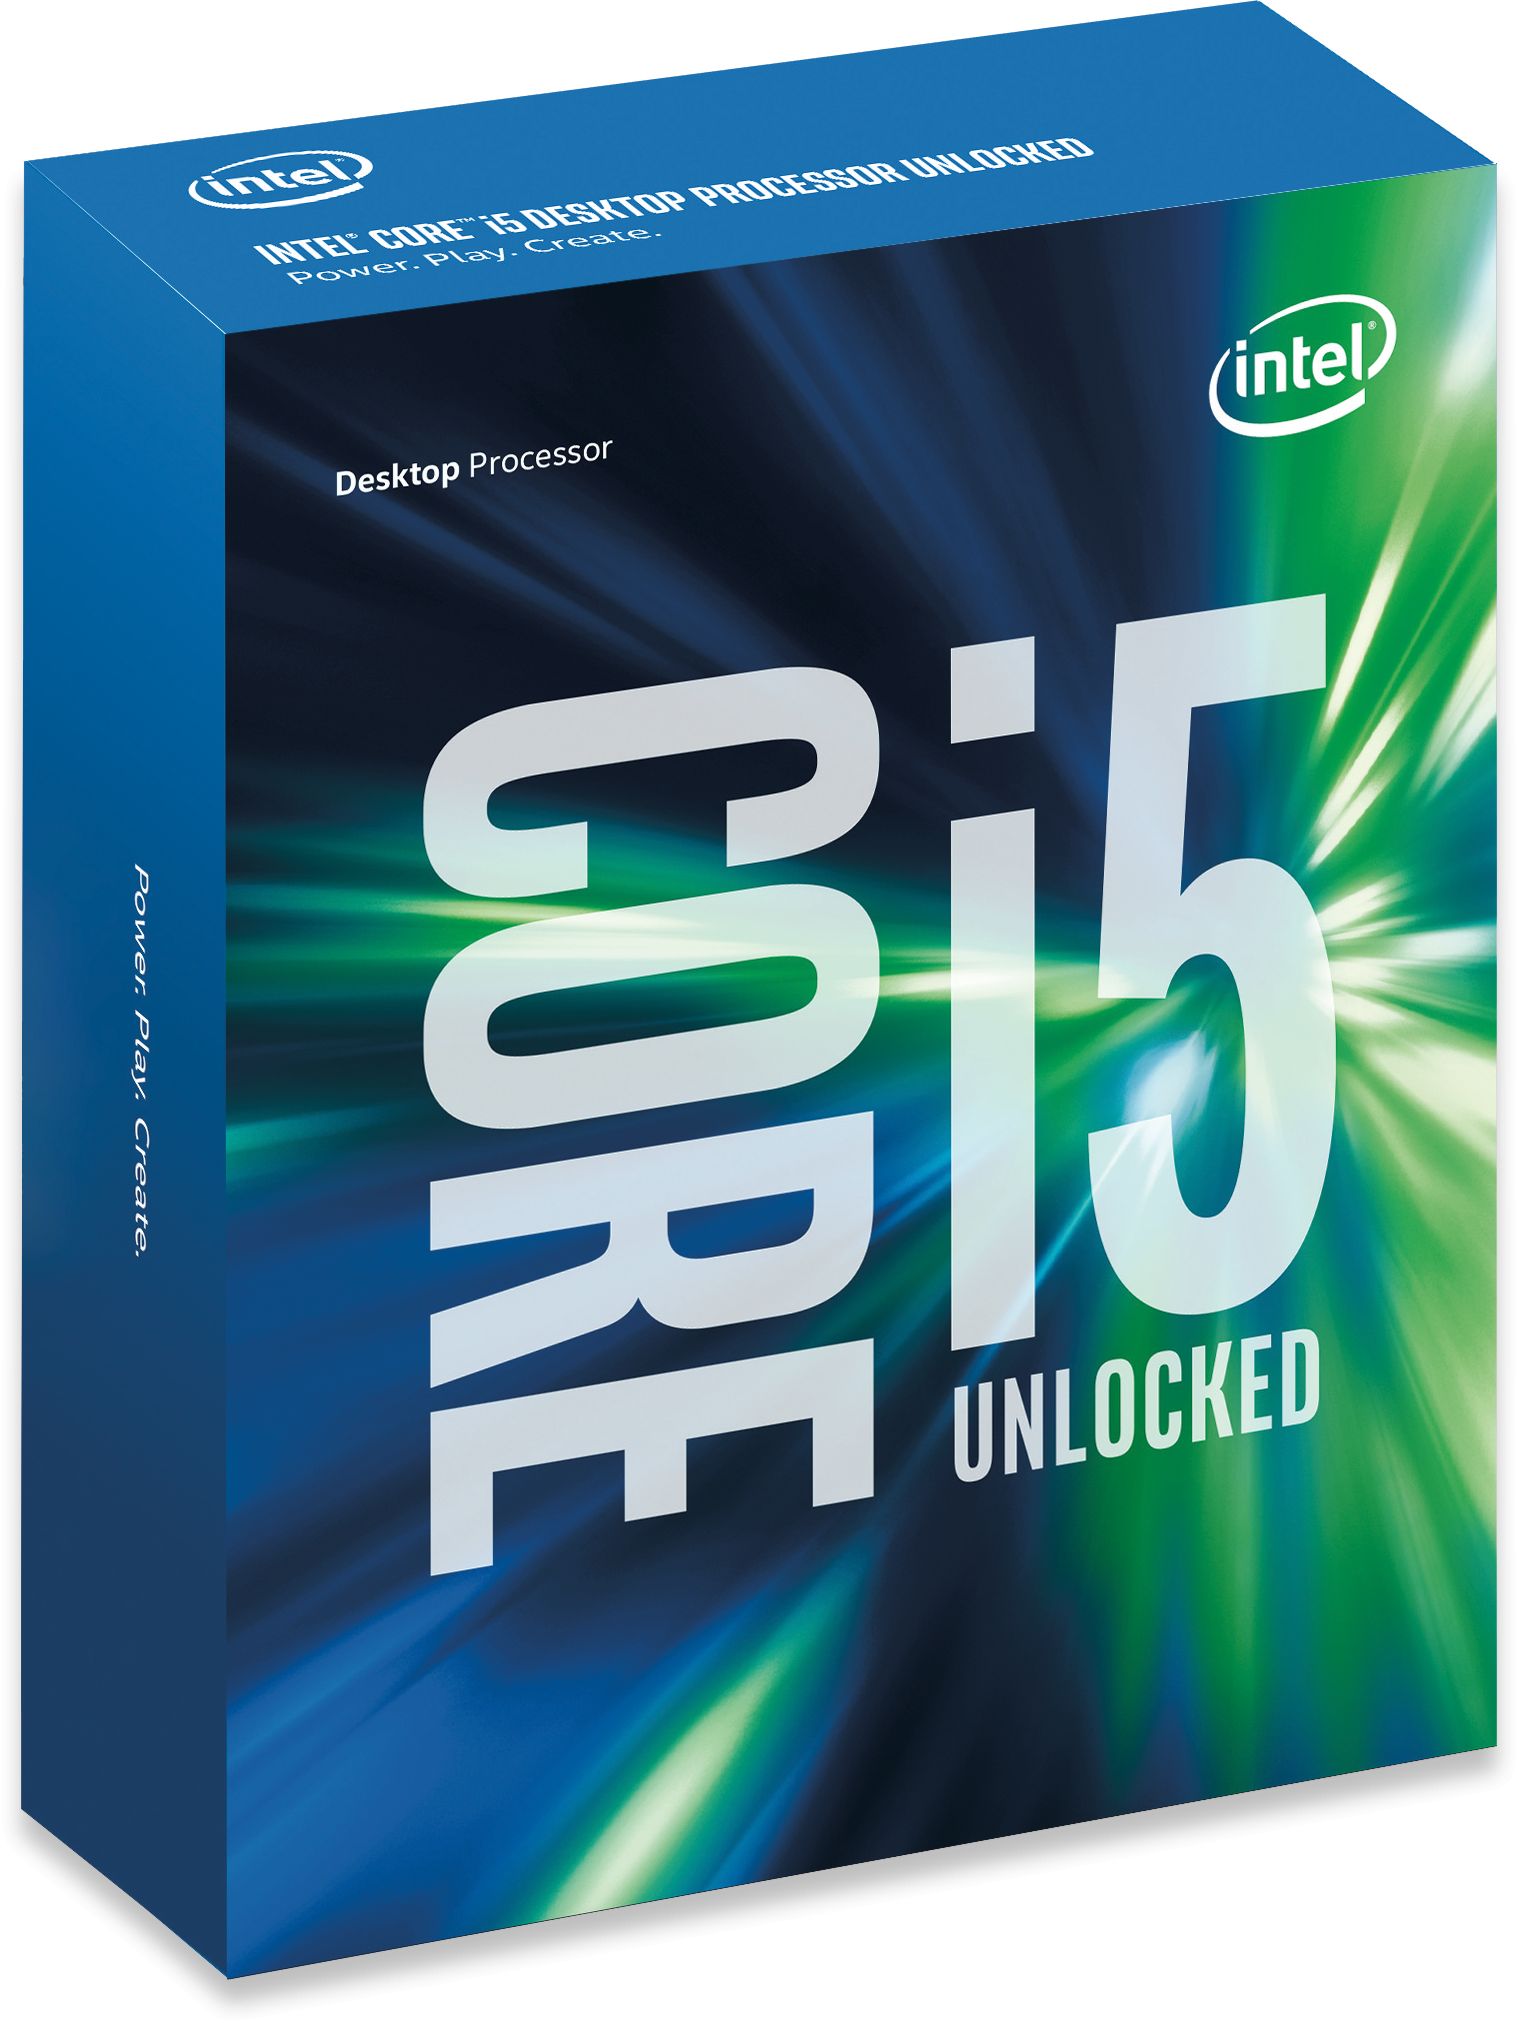 Intel Skylake 6th Generation Core i5 Processors